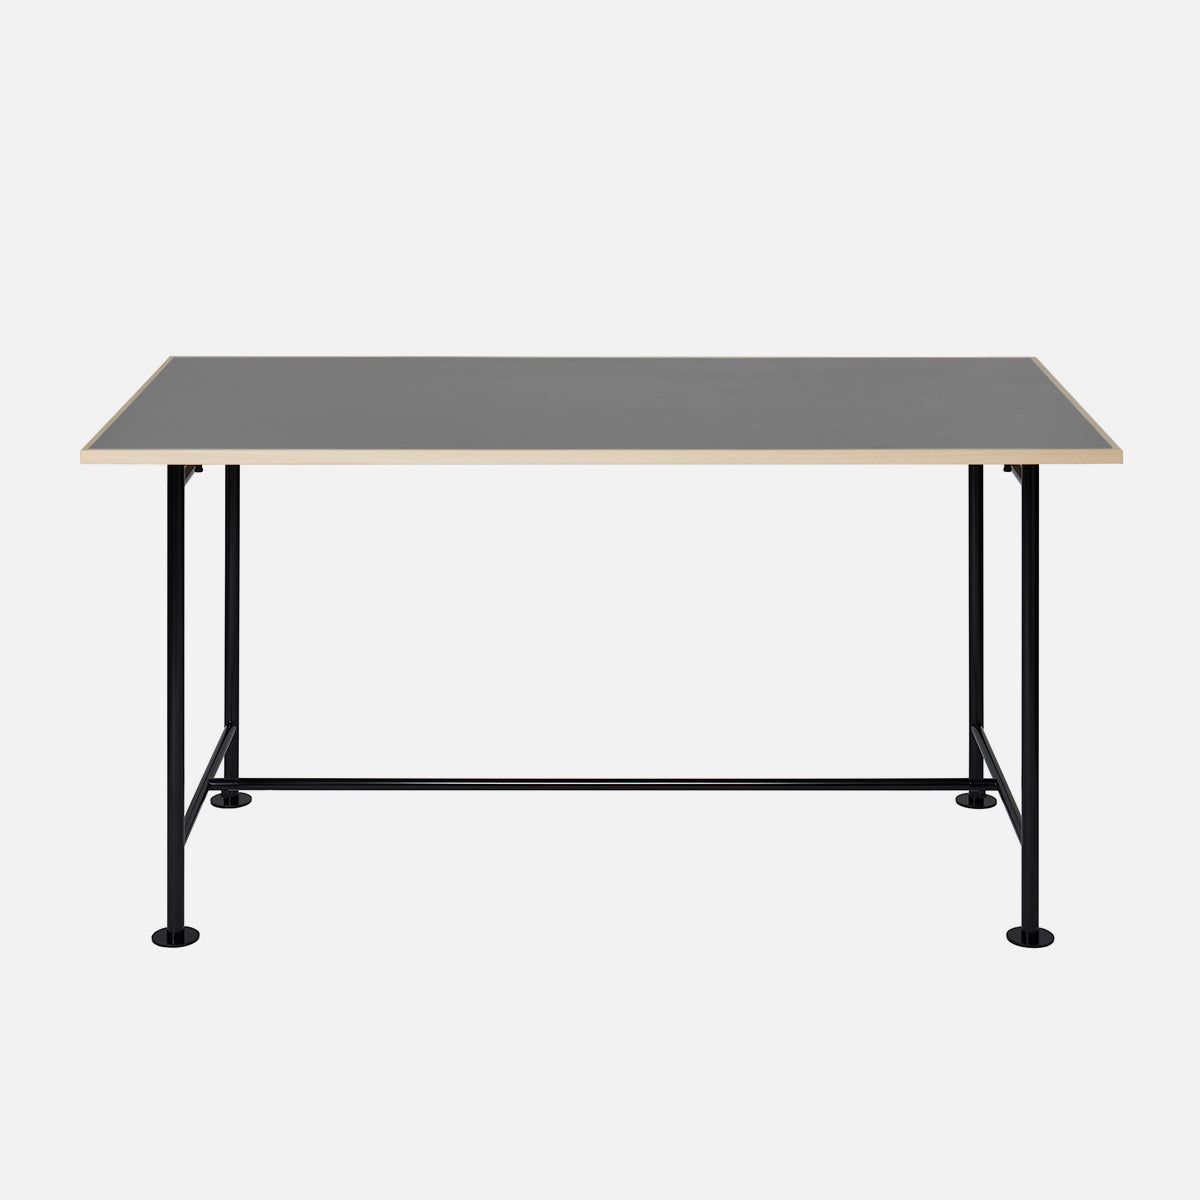 KIT Table TBL-01 GYBK　WORK TABLE  ミーティングテーブル  ワークテーブル